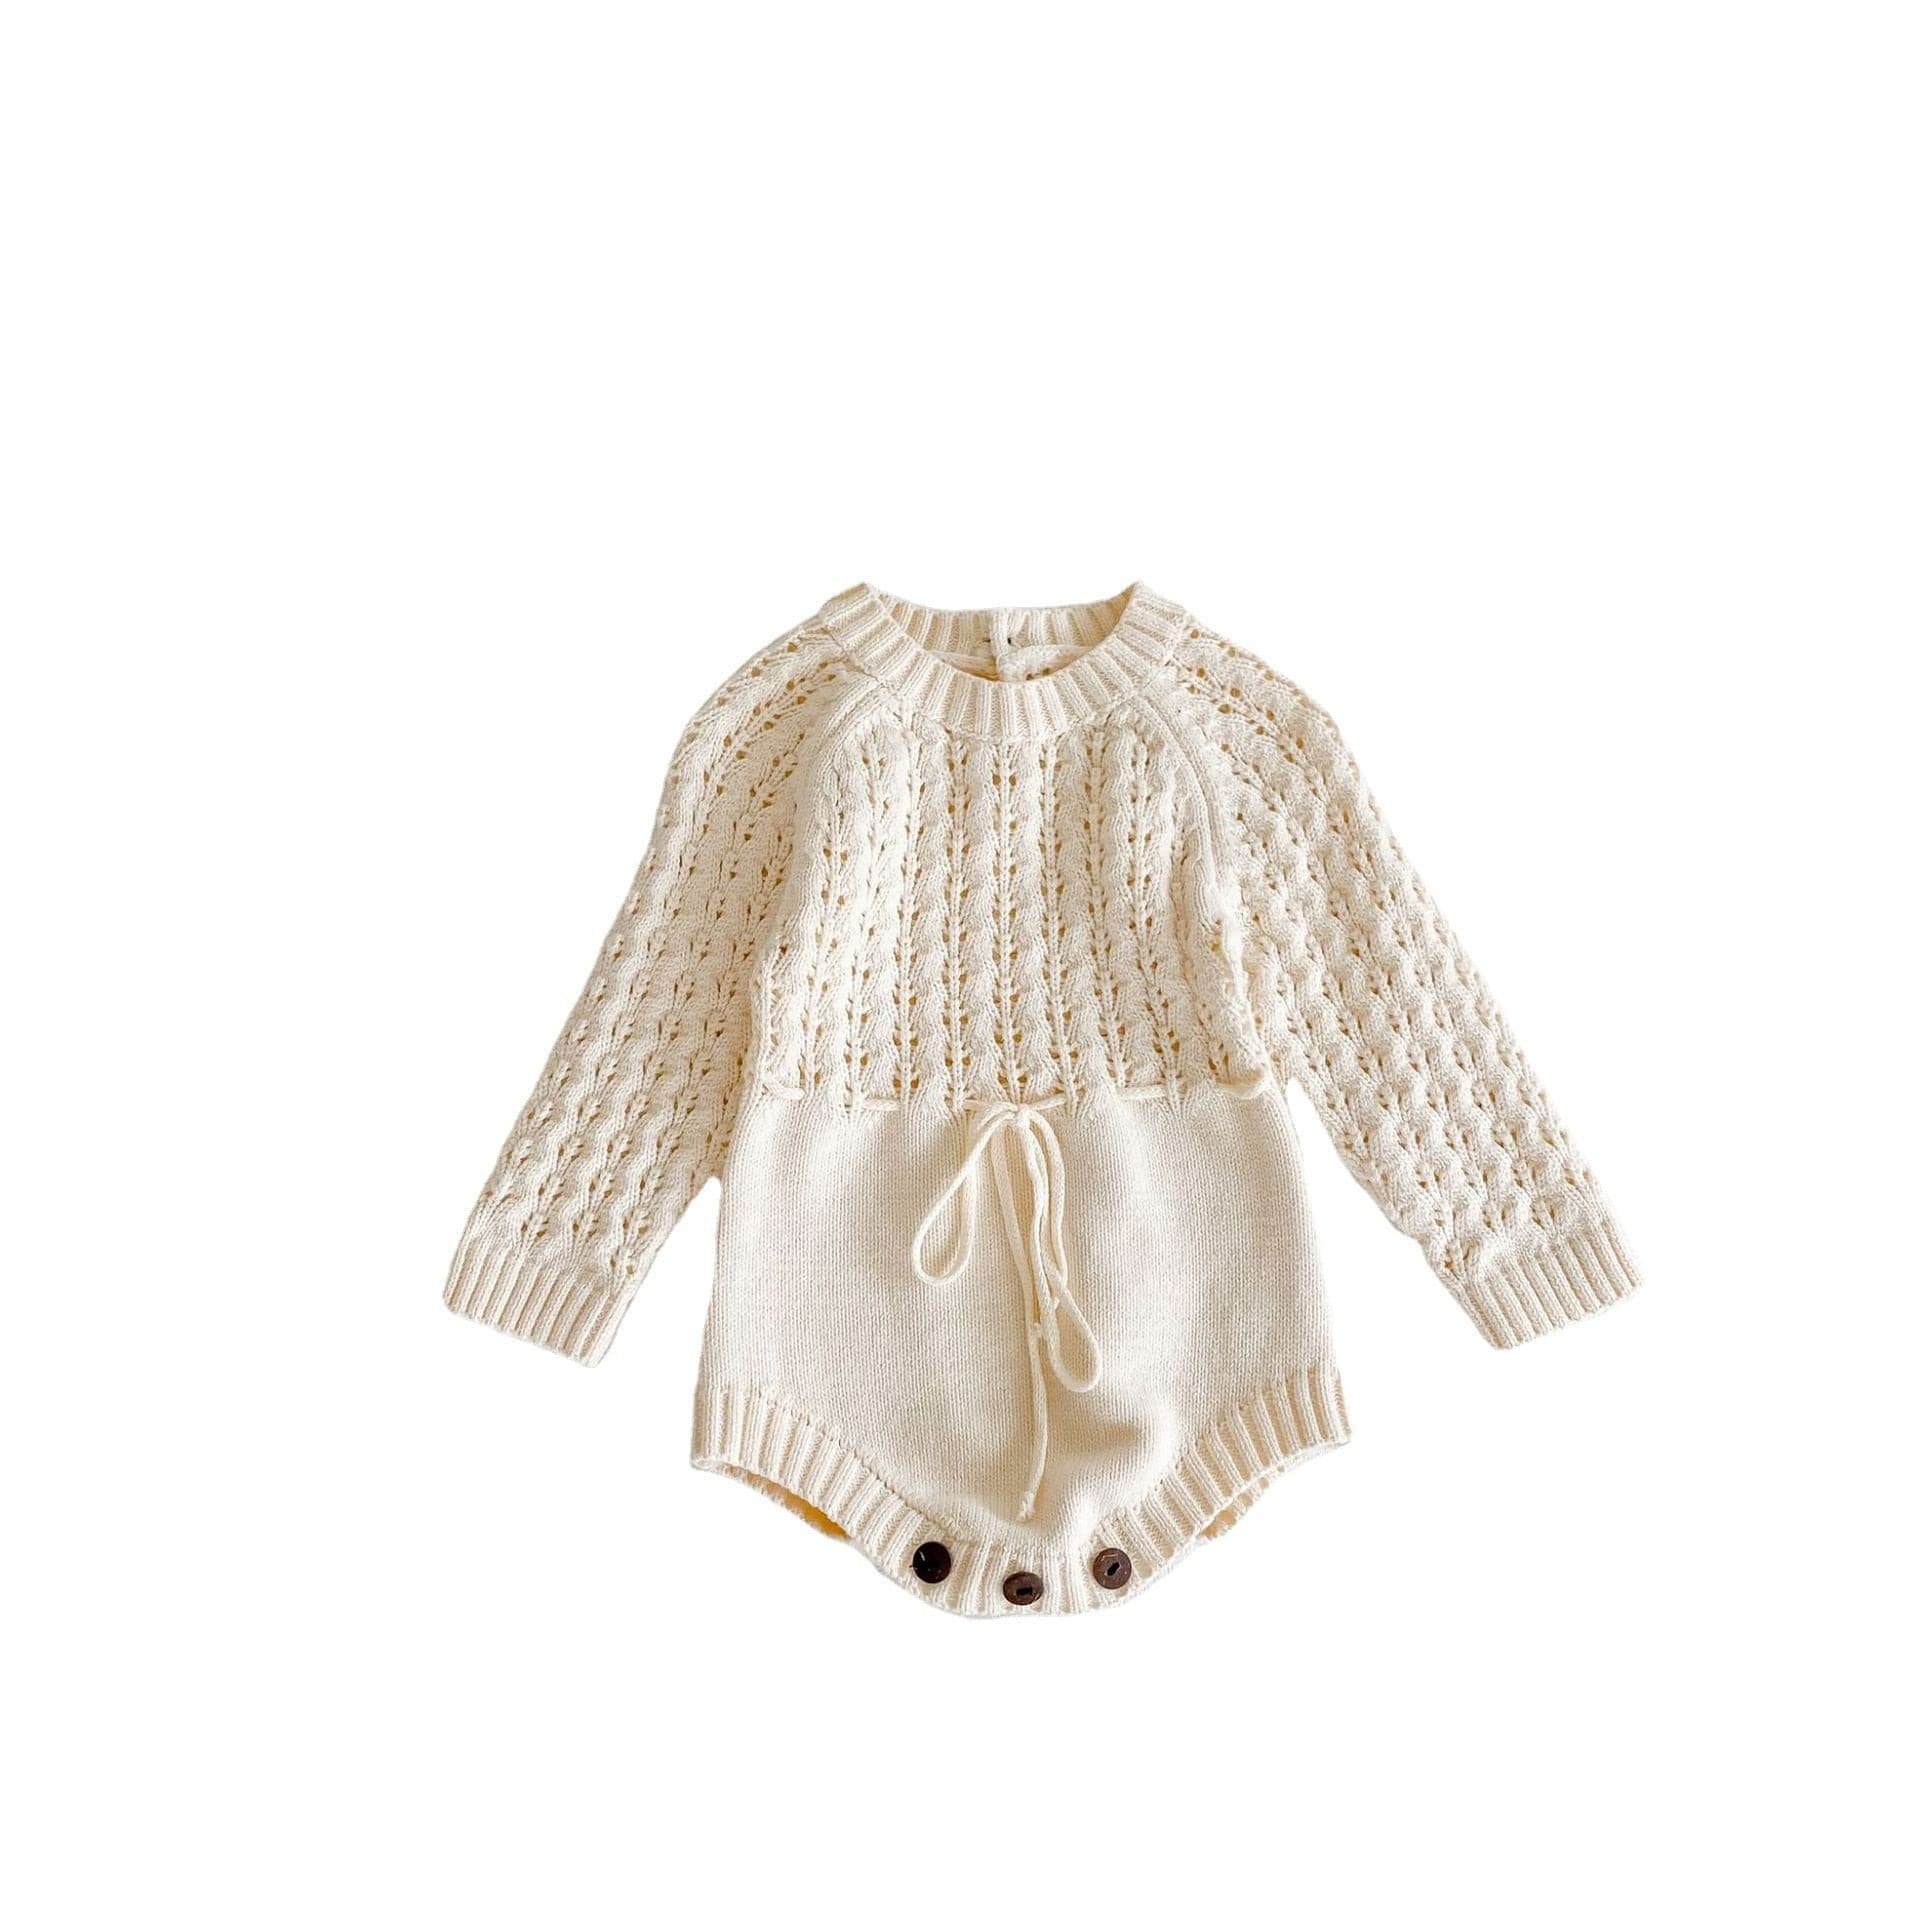 Babygirl Hand-knit Sweater Romper.